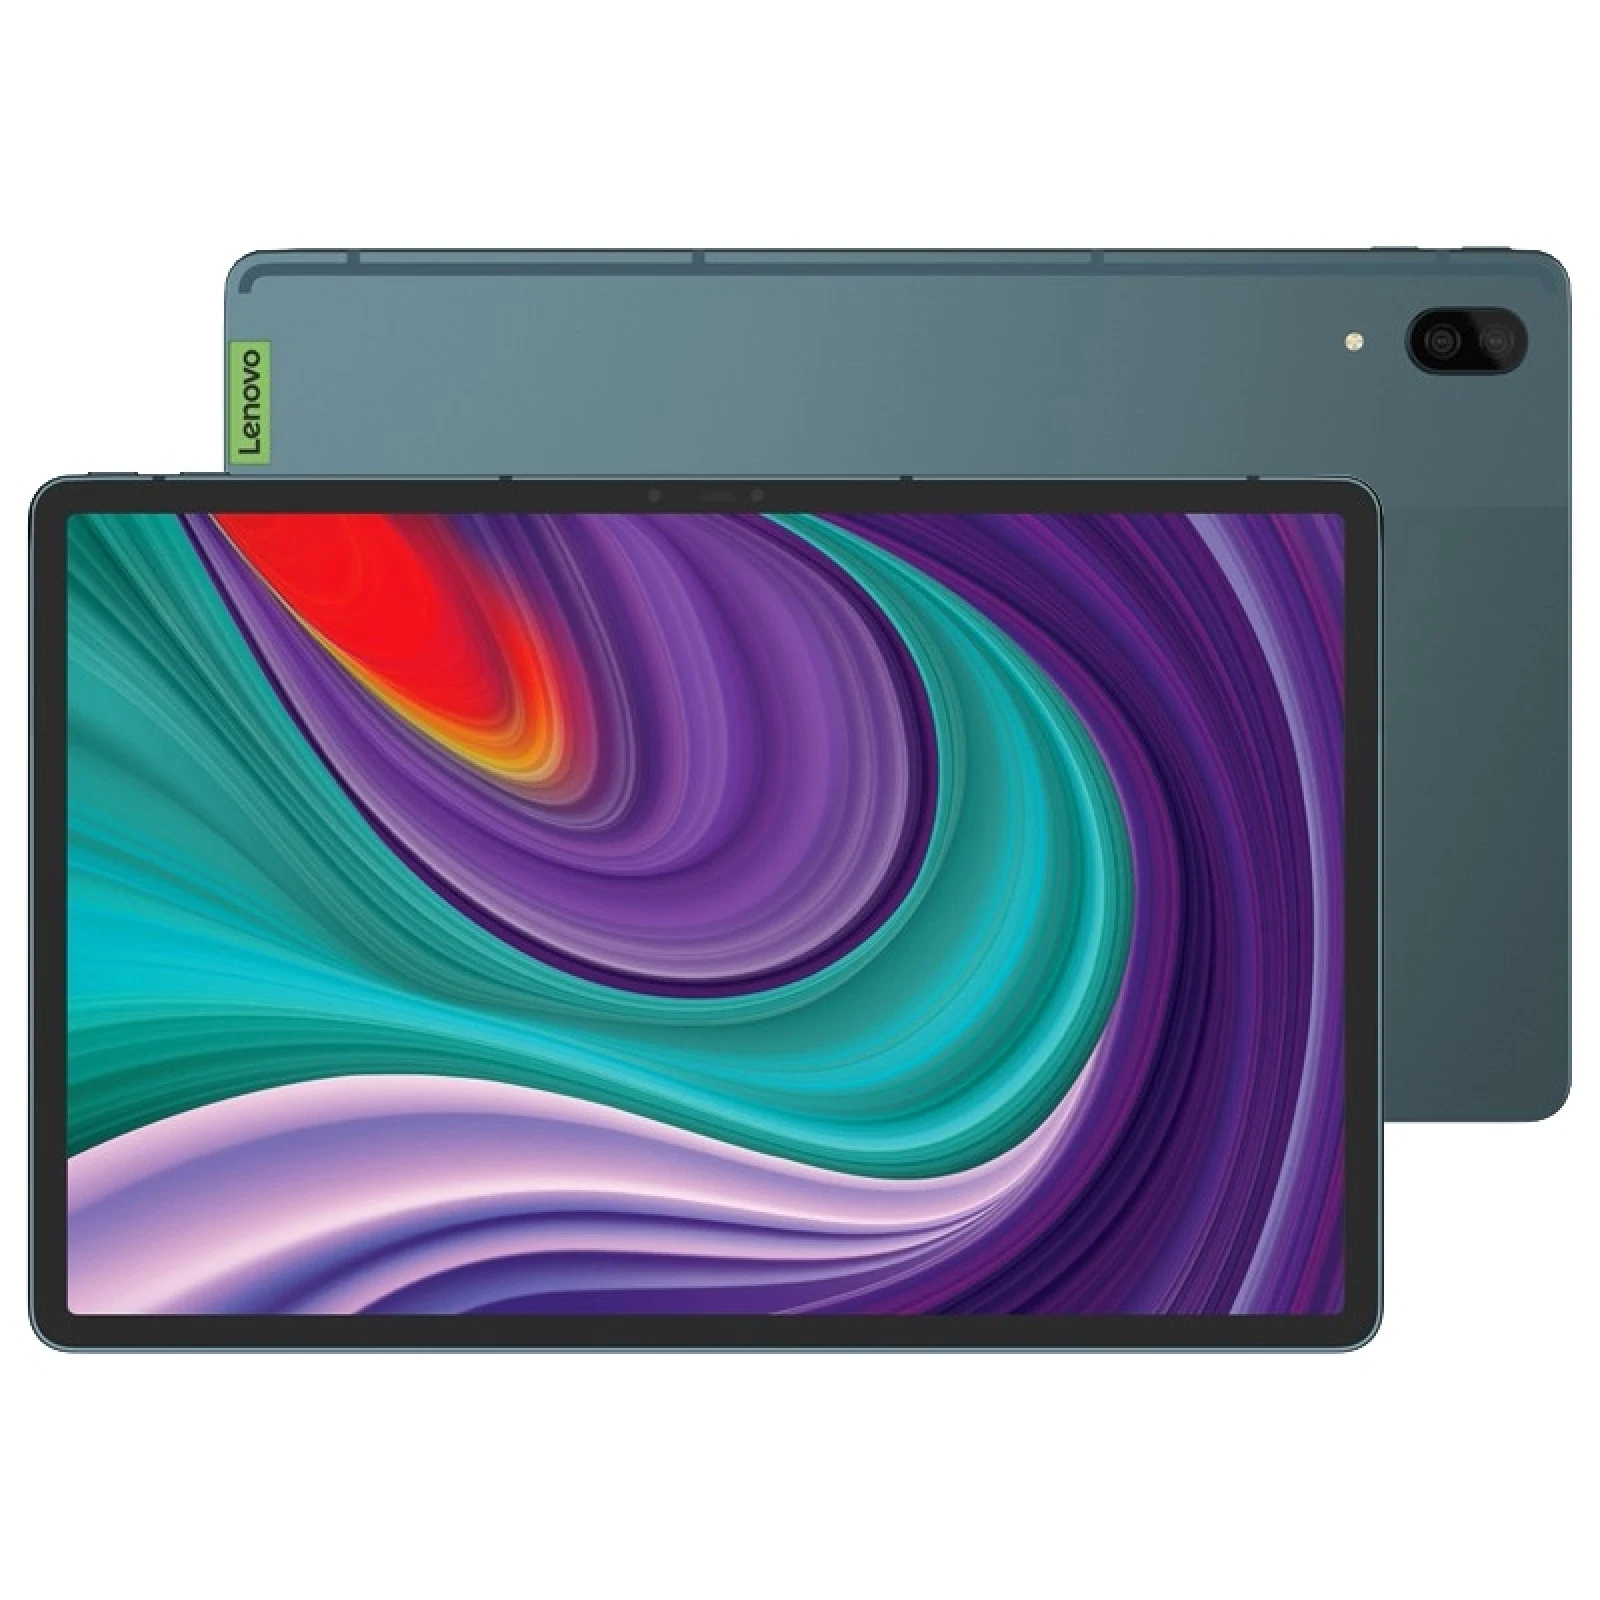 Lenovo xiaoxin almofada pro 2021 wifi 11.5 "tela oled snapdragon 870 octa núcleo 6gb + 128gb android 11 tablet 8600mah face id global